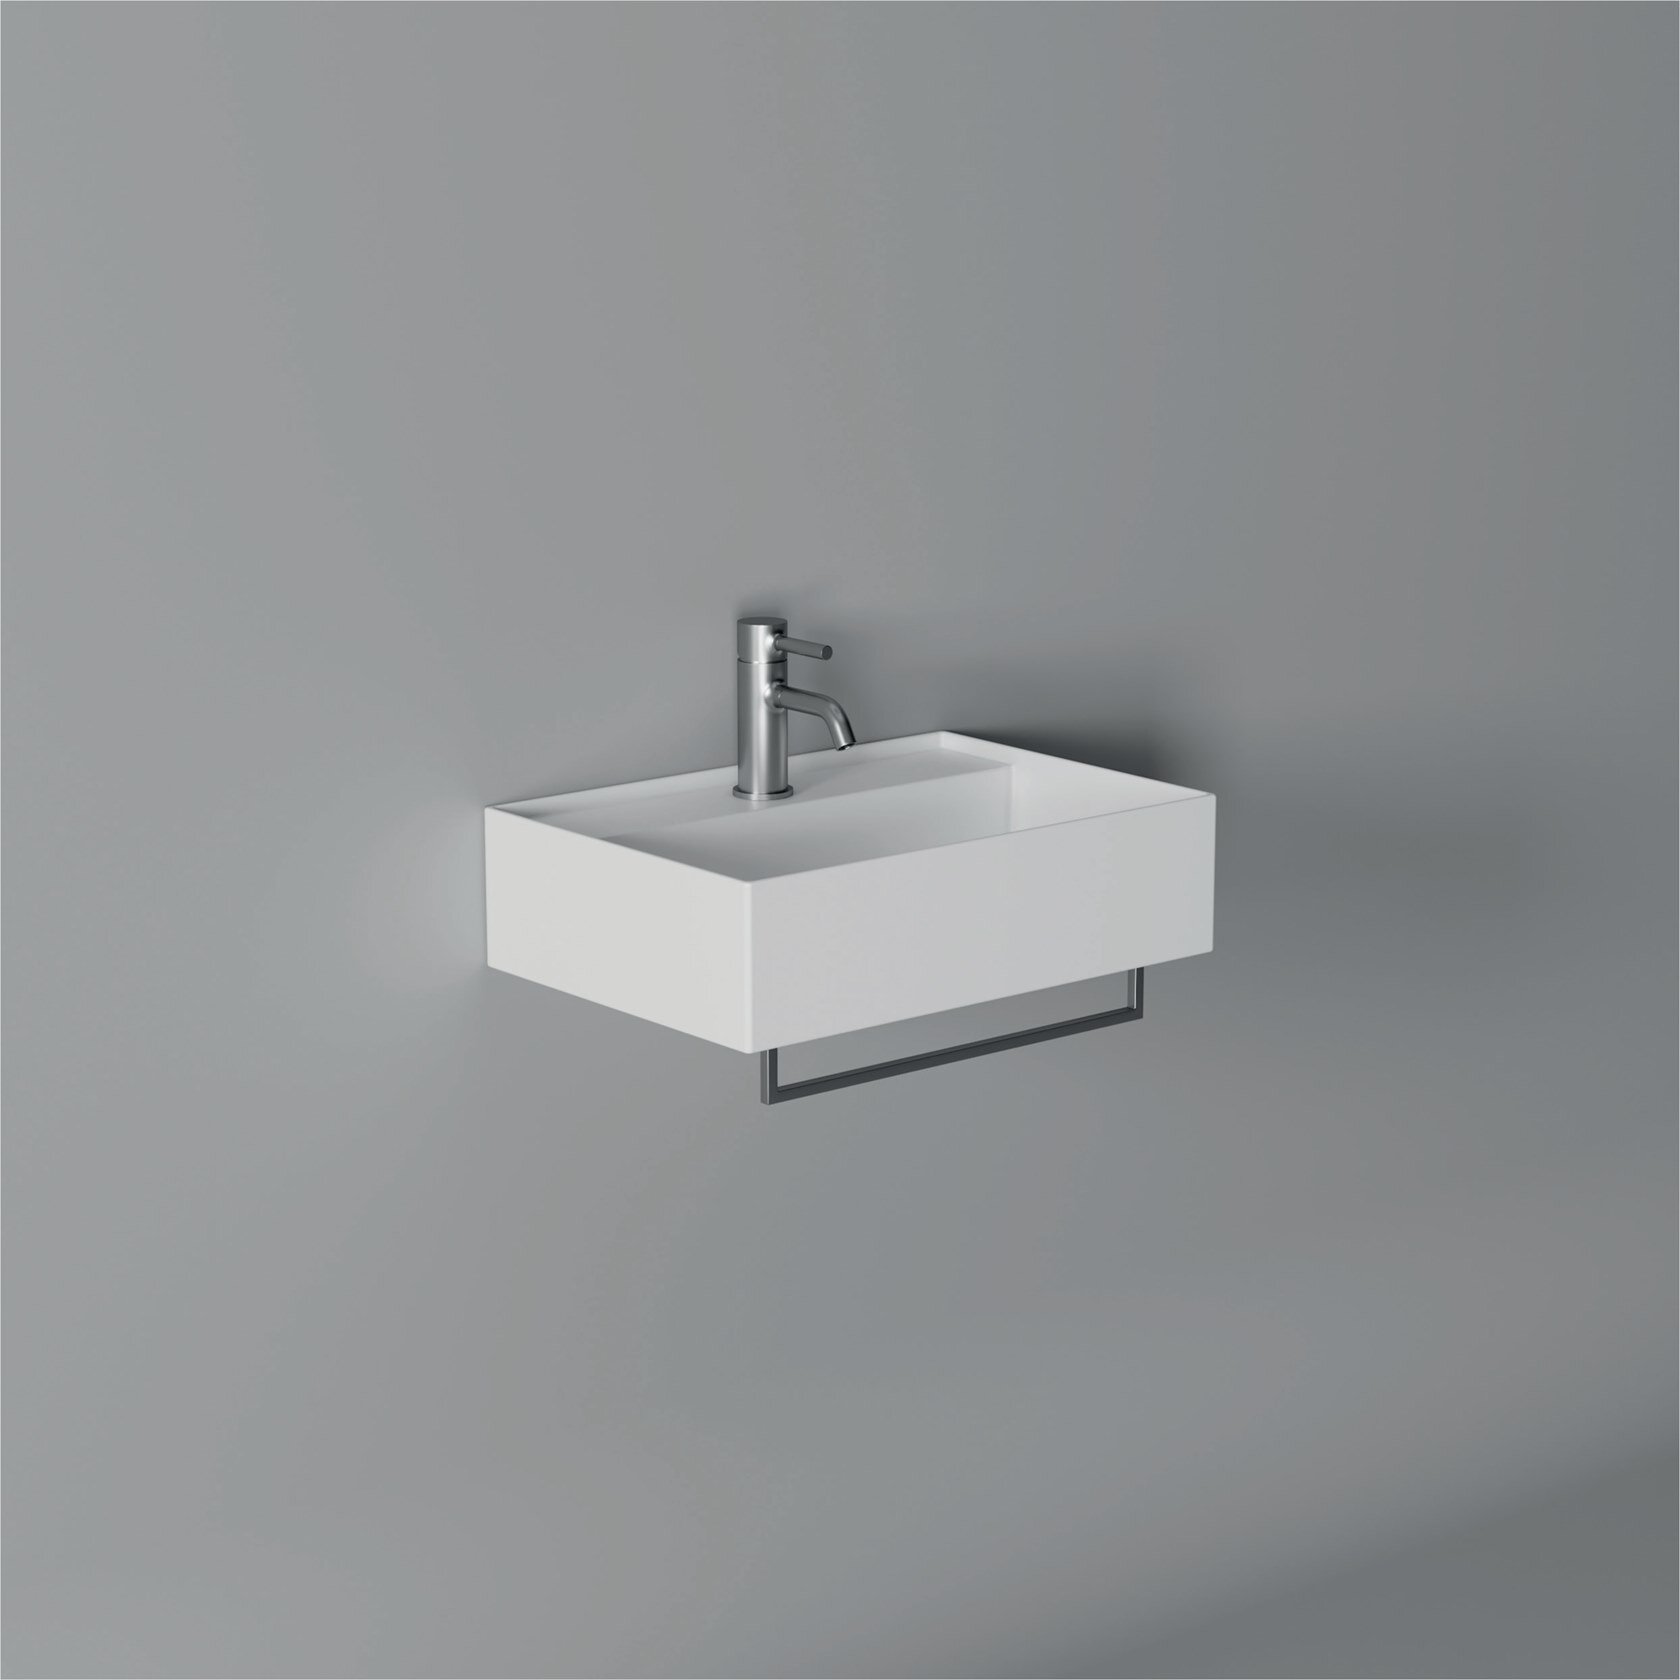 2b_HIDE-Wall-mounted-washbasin-Alice-Ceramica-364911-rel62eec69f.png